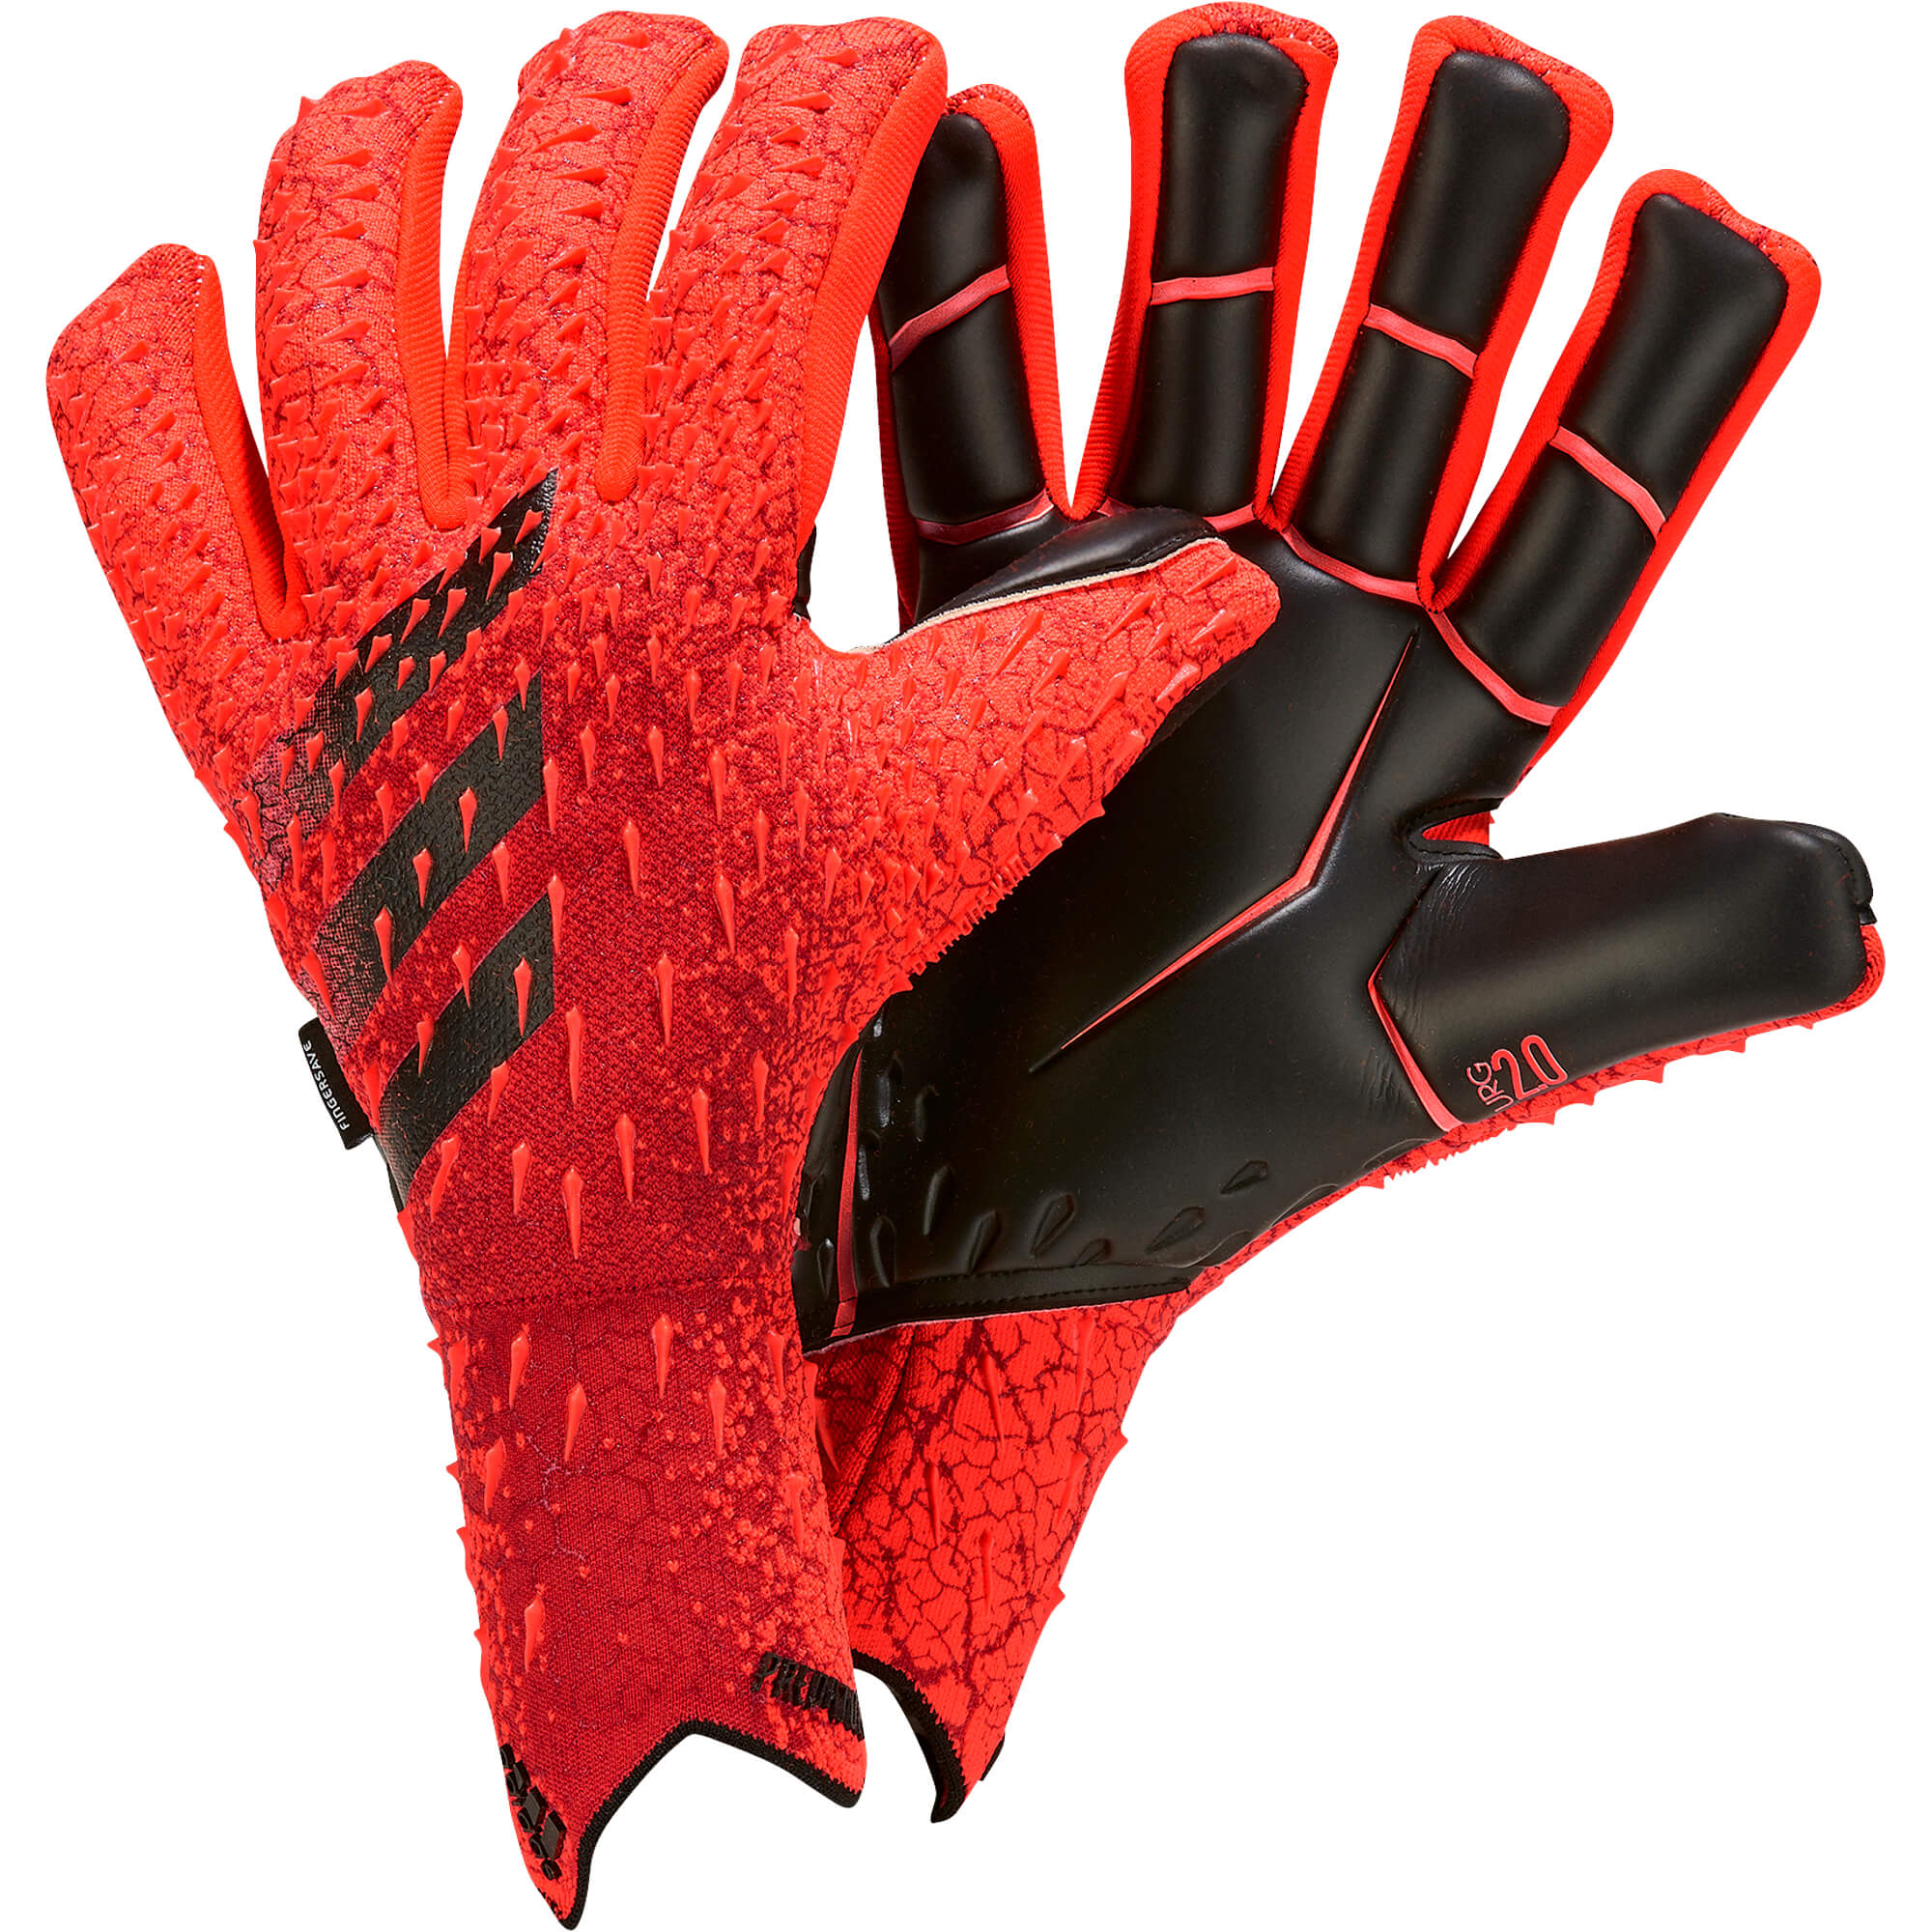 Me kleding alliantie Adidas Predator Pro Fingersafe Solar Red/Black - Keepershandschoenen